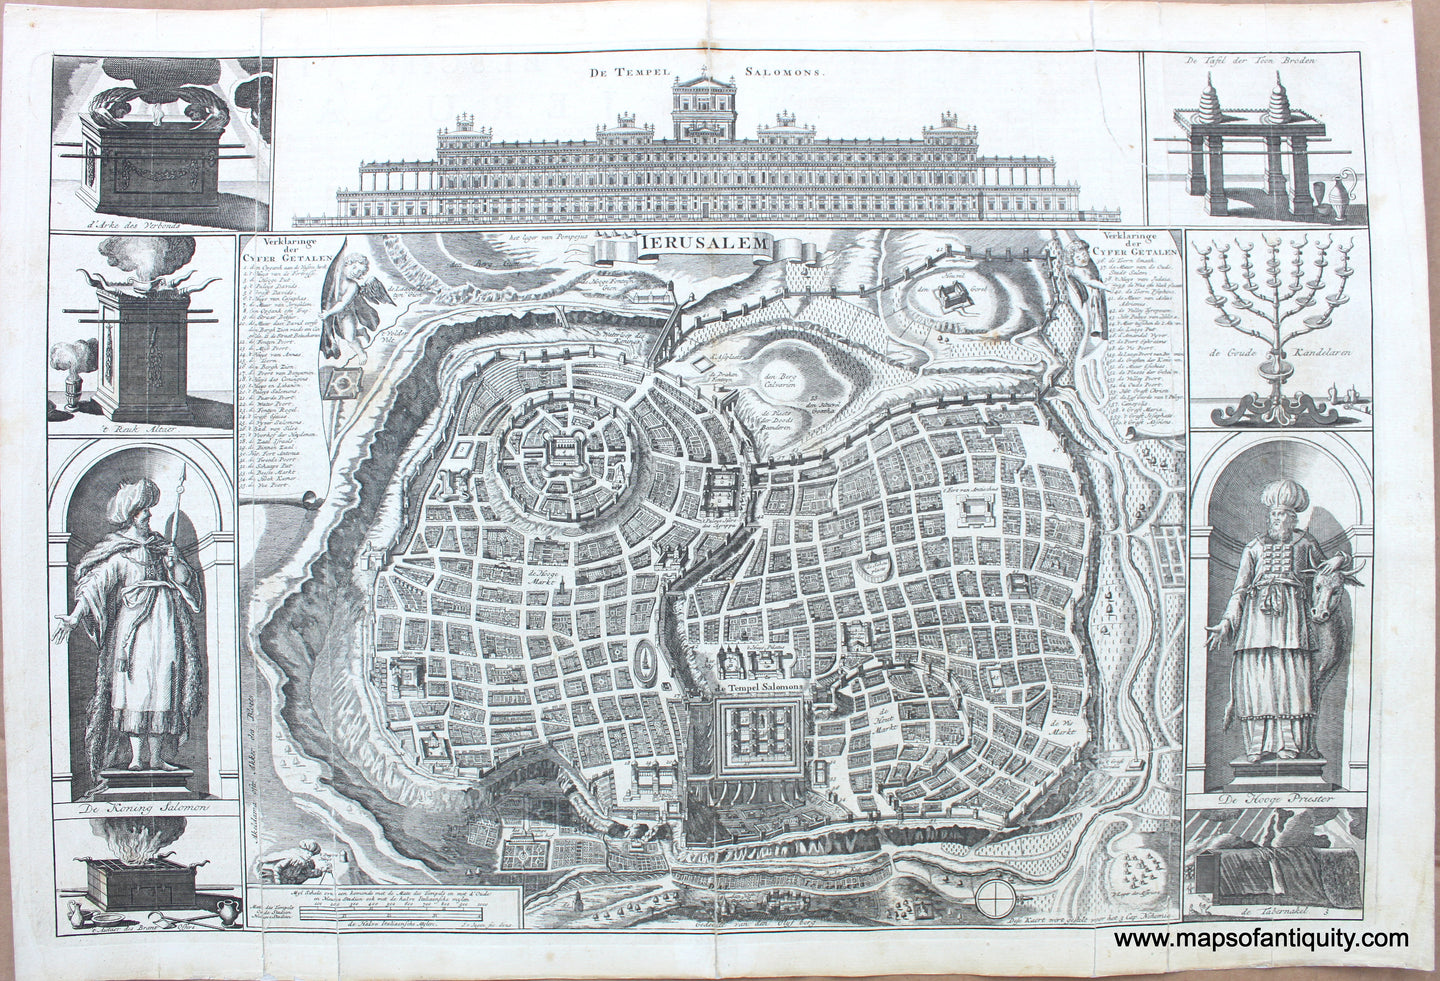 1744 - Ierusalem (Jerusalem) - Antique Map